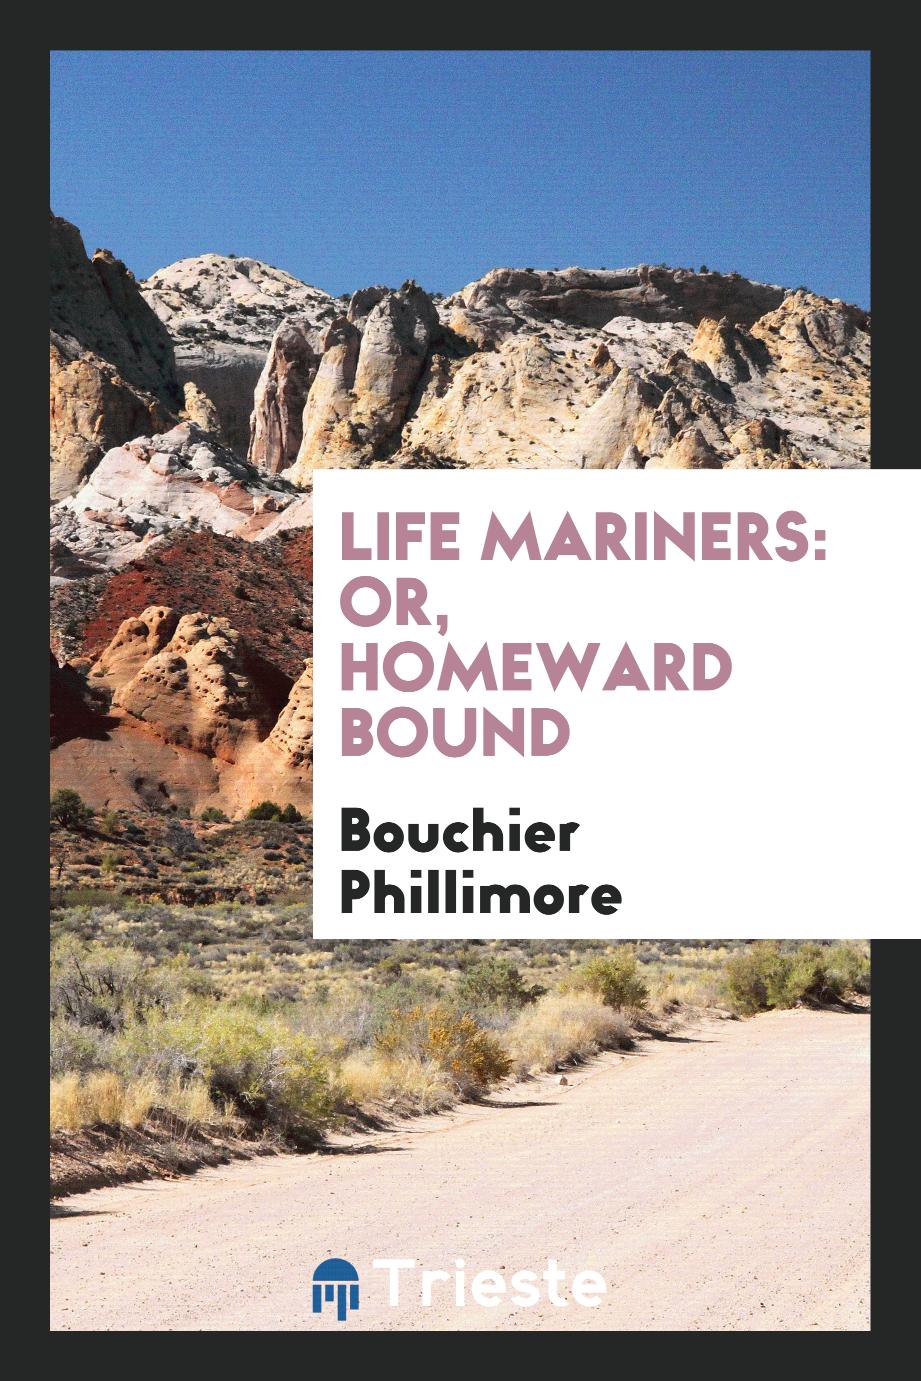 Life mariners: or, Homeward bound